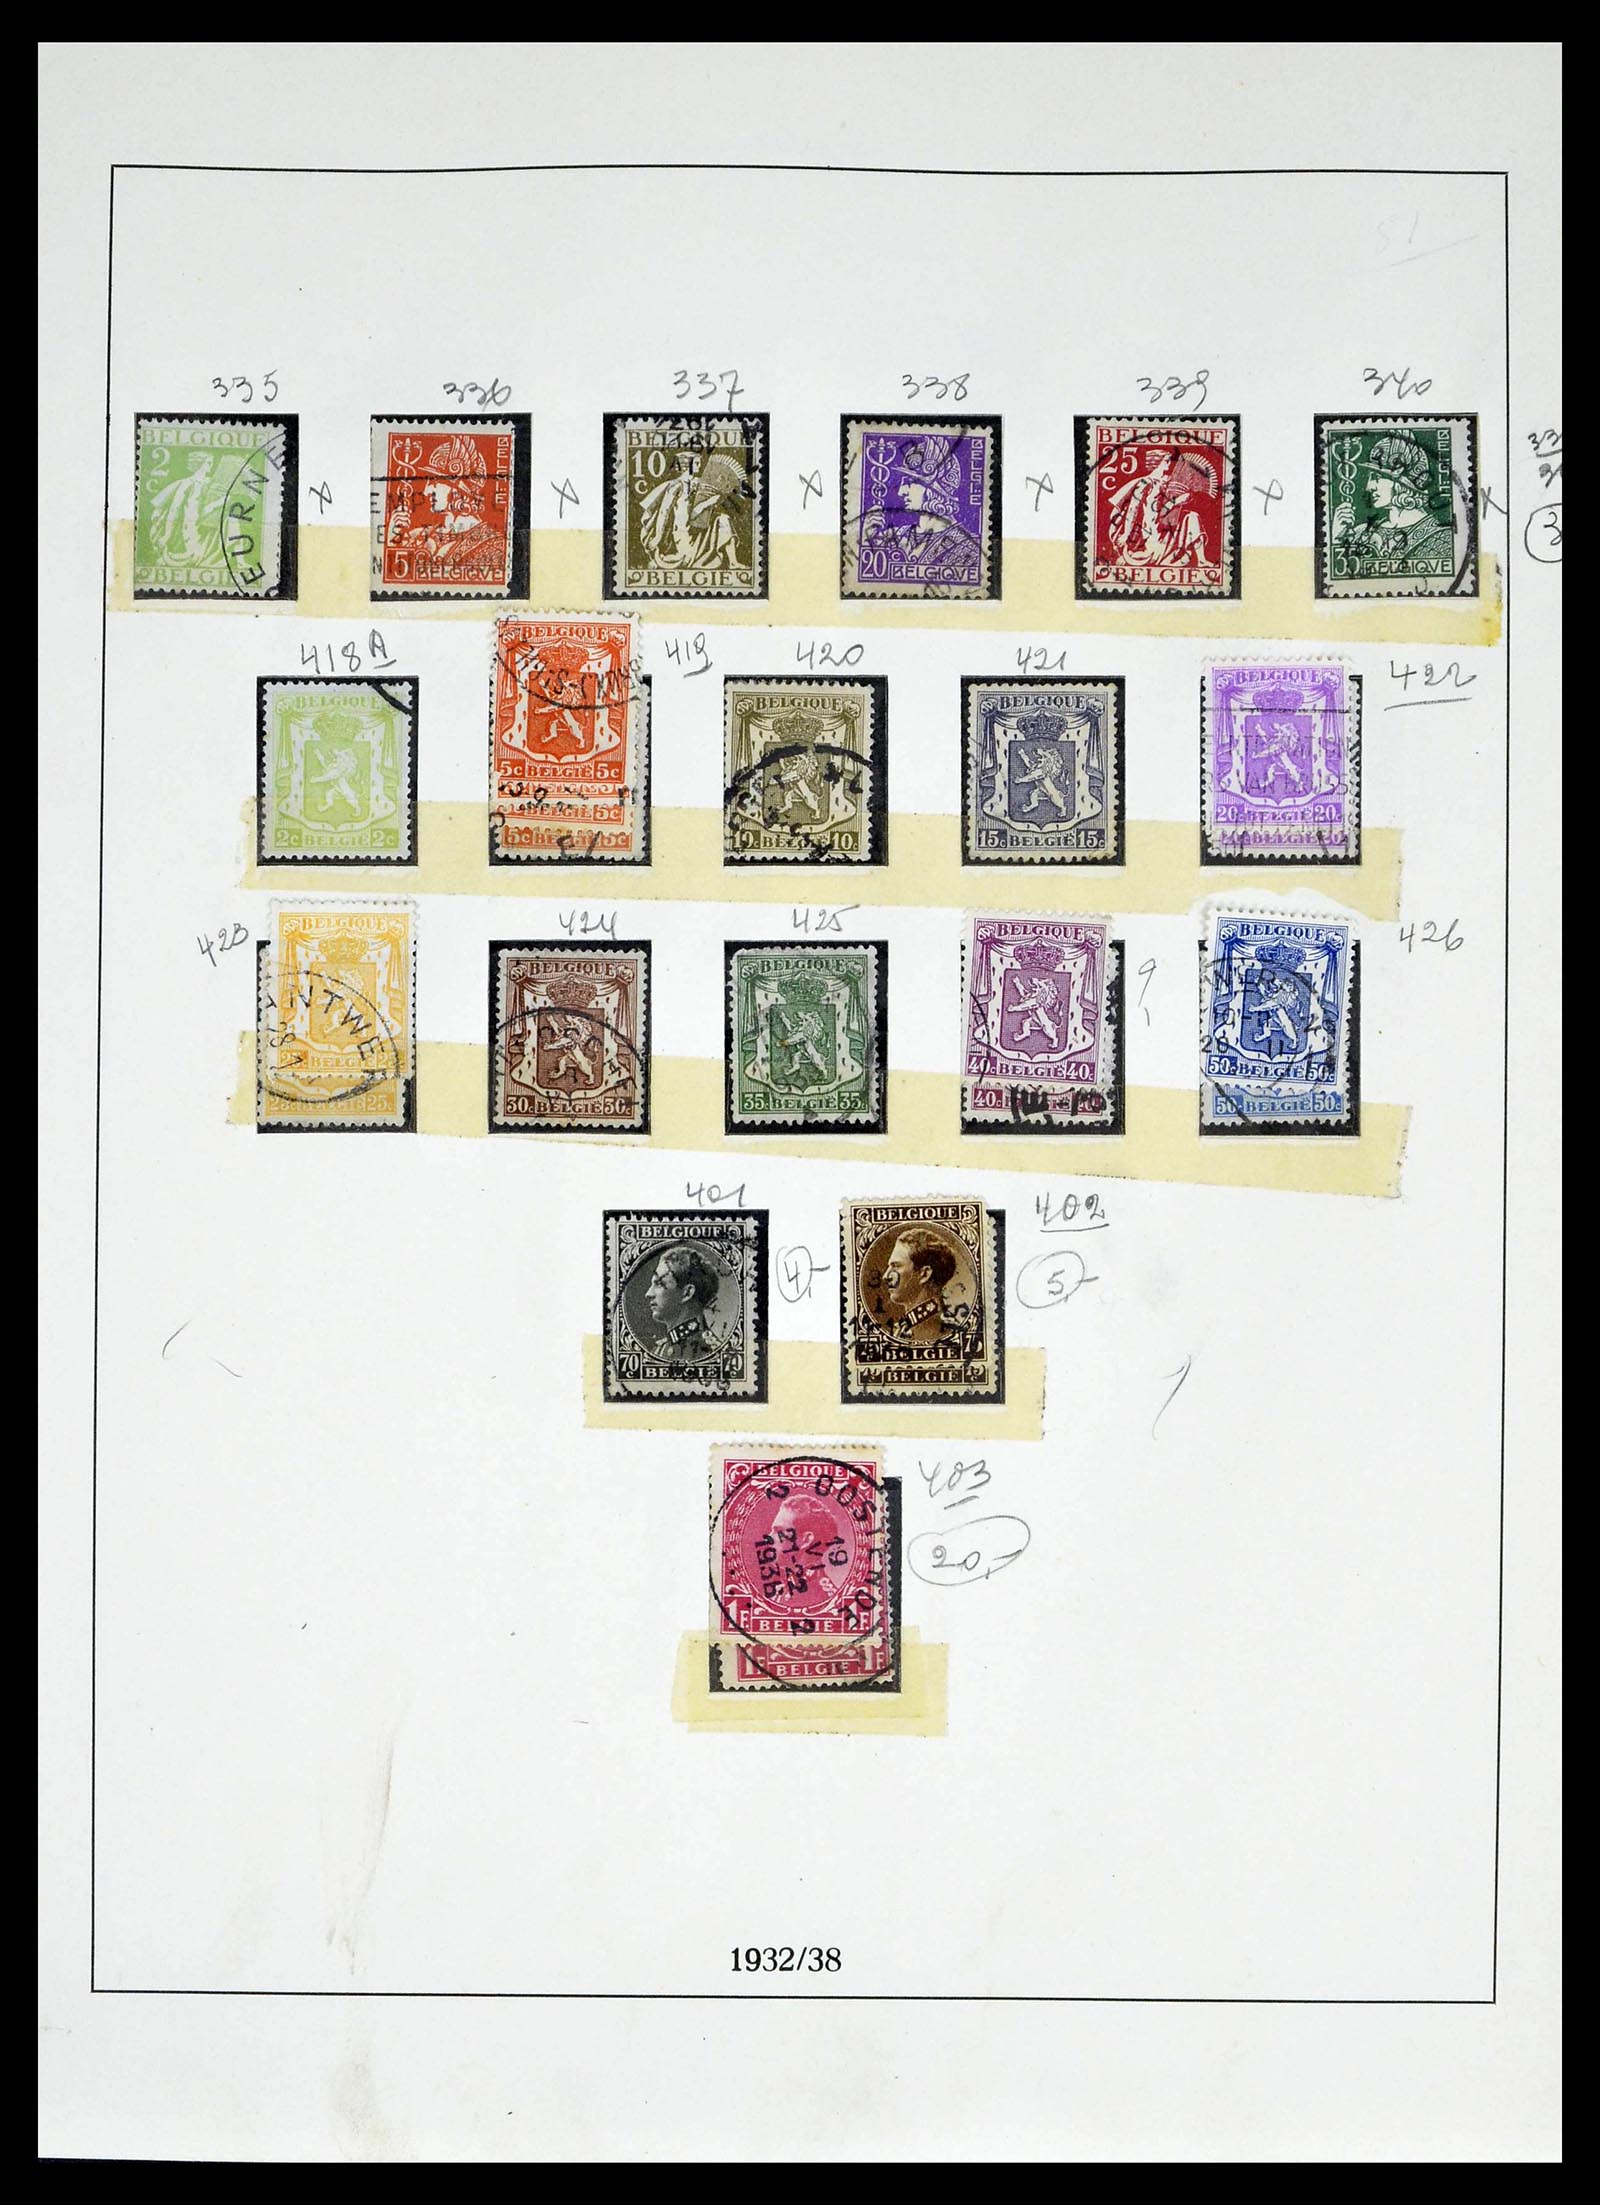 39265 0048 - Stamp collection 39265 Belgium 1849-1962.